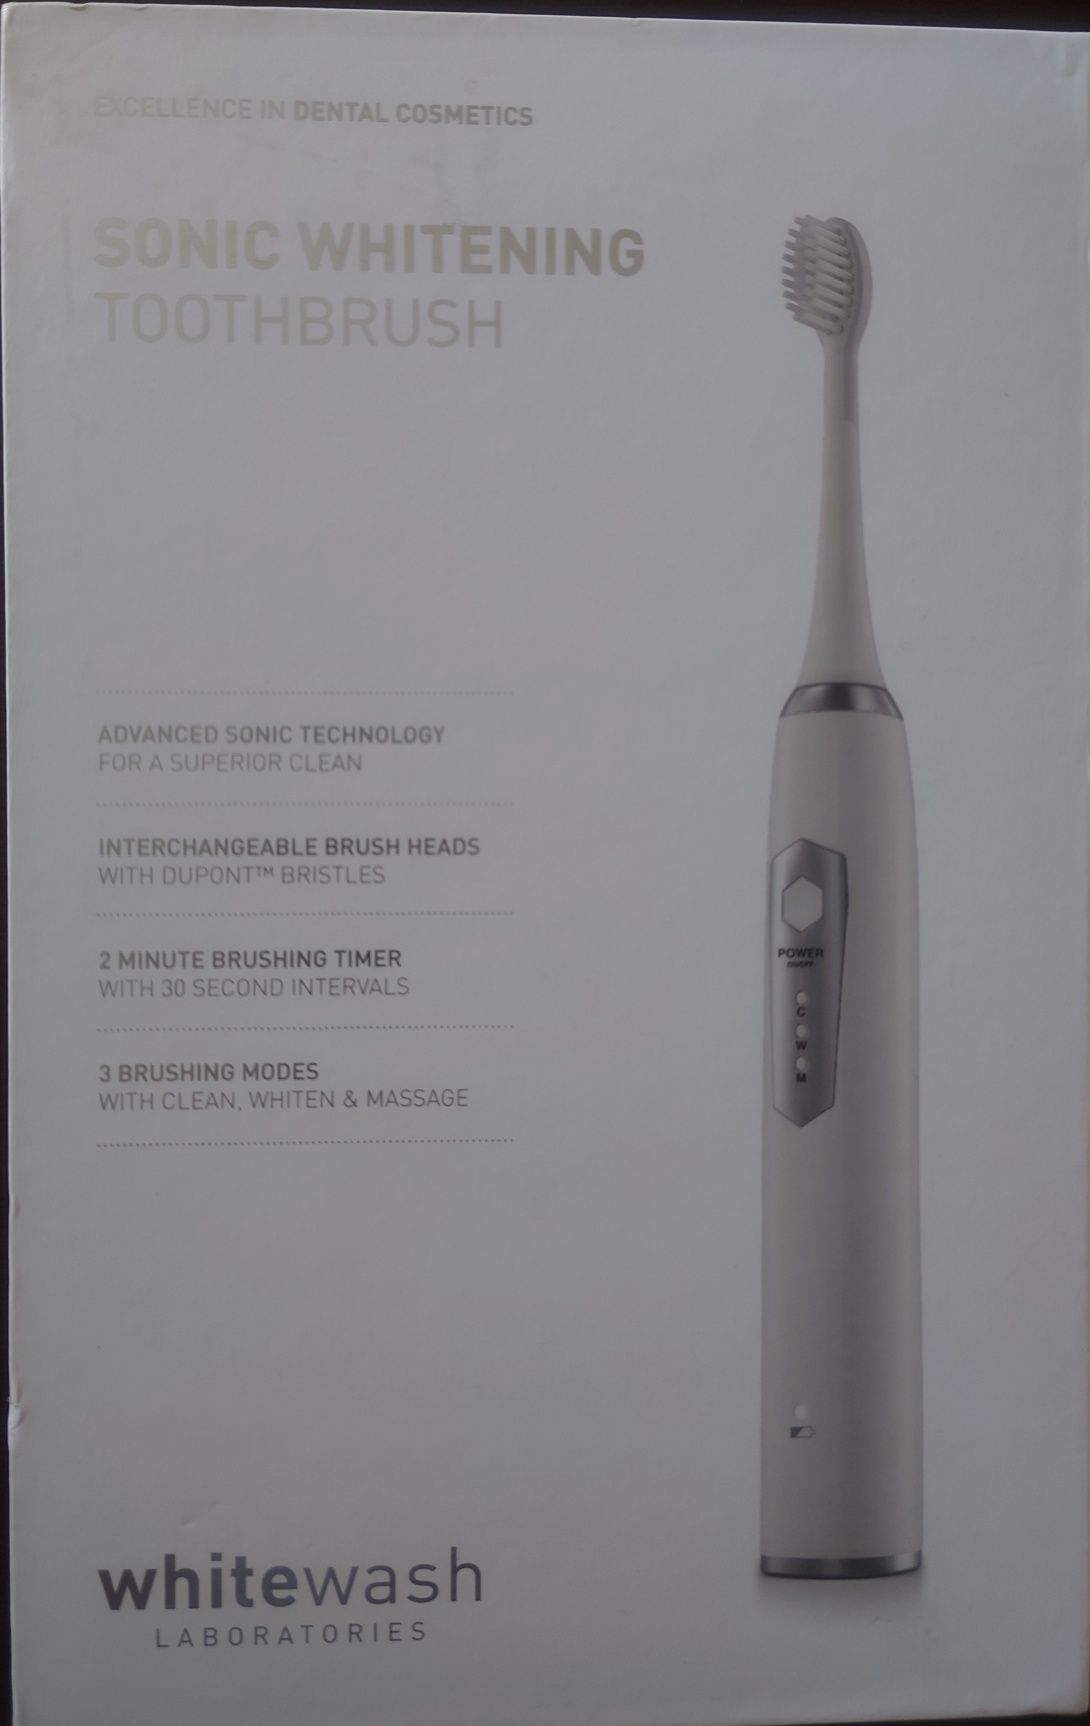 Sonic whitening toothbrush sw2000